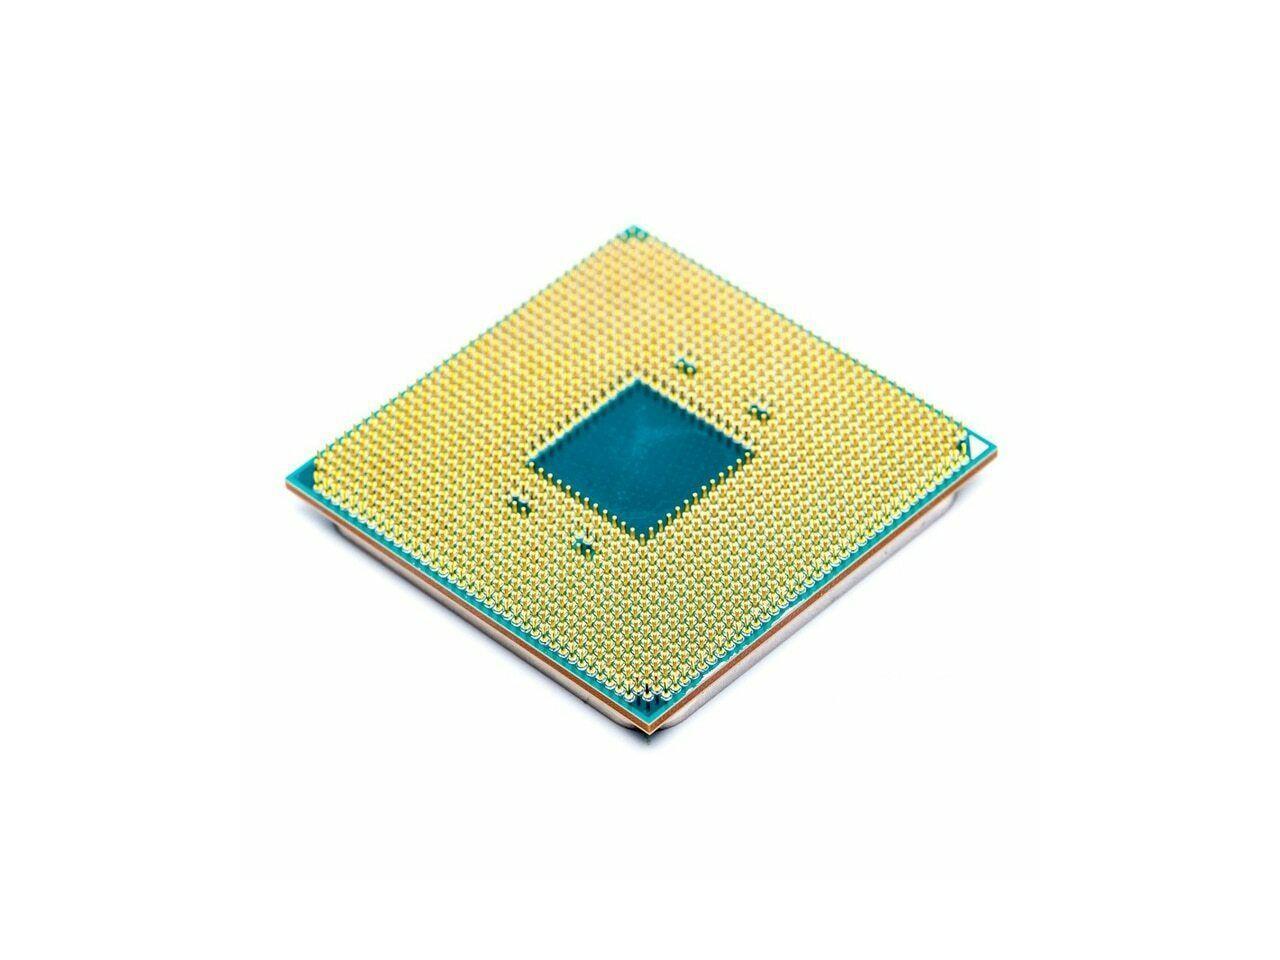 AMD RYZEN 7 2700 8-Core 3.2 GHz (4.1 GHz Max Boost) Socket AM4 65W YD2700BBAFBOX Desktop Processor - OEM